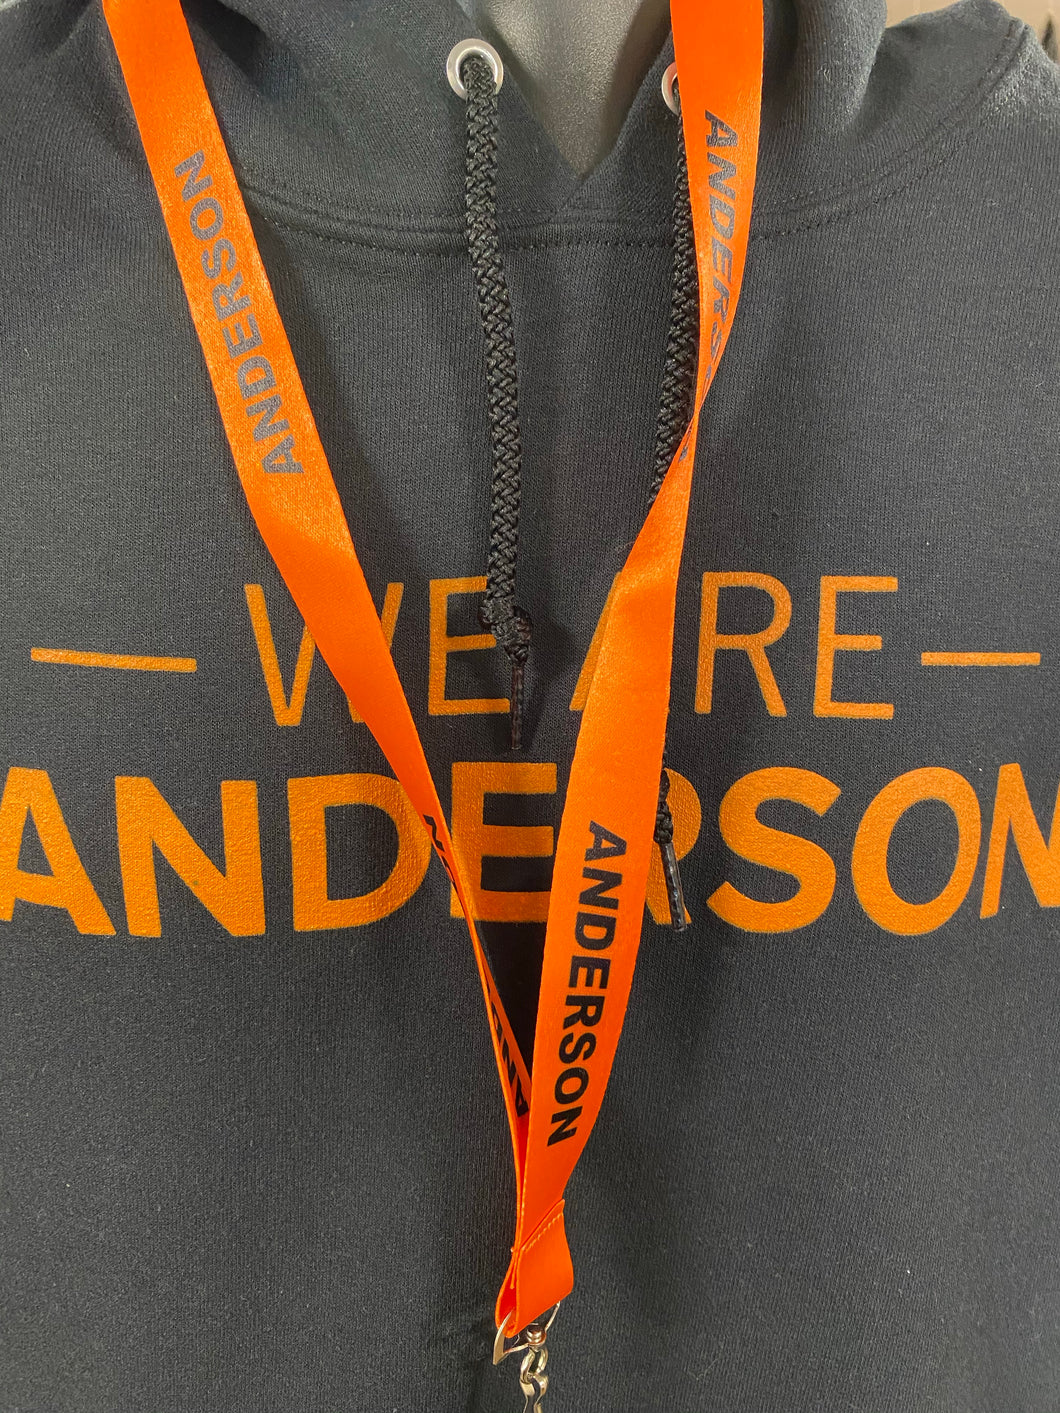 Lanyard - Anderson - Orange